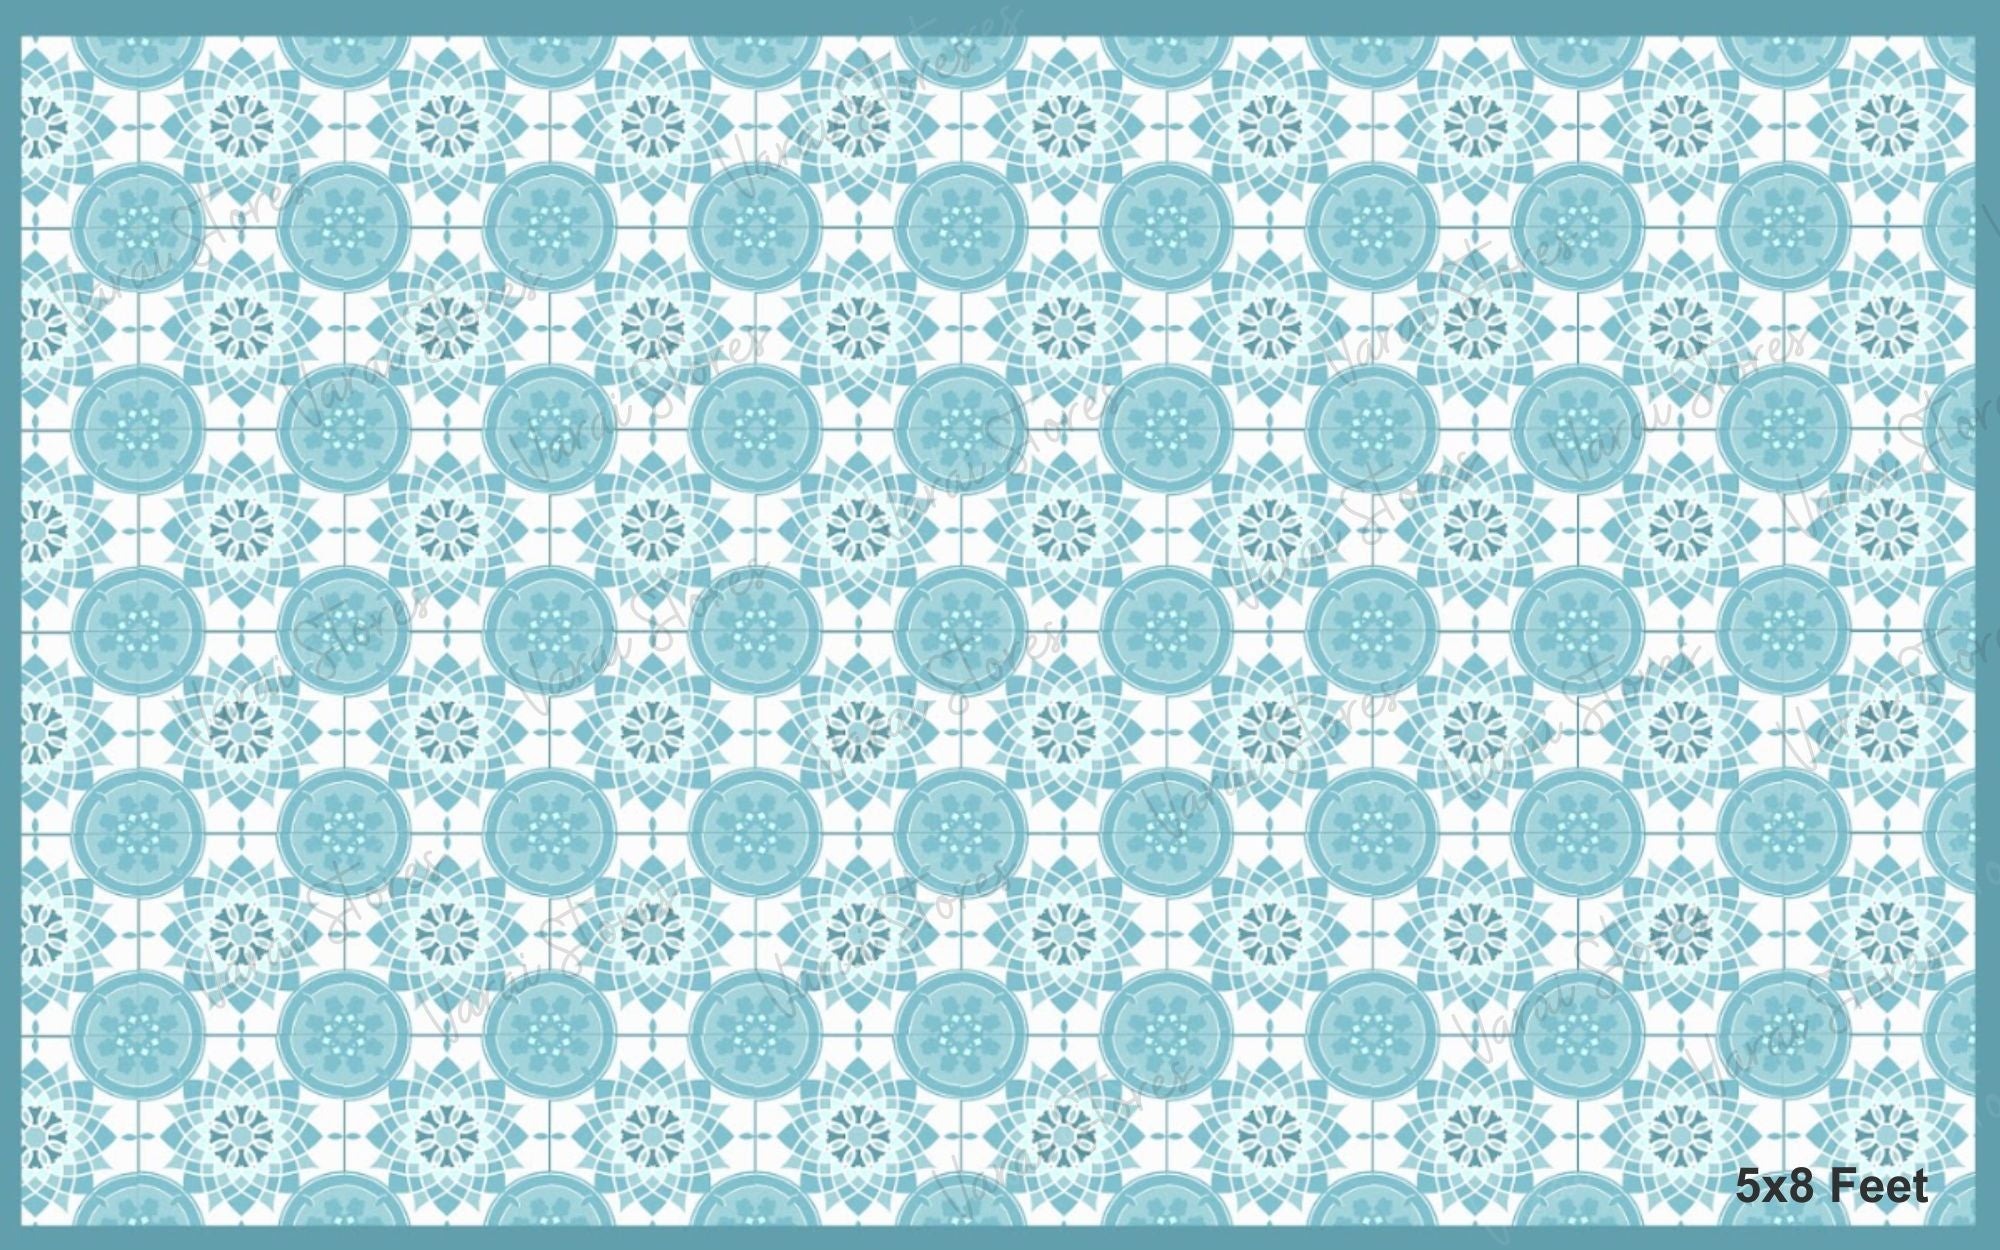 Blue Mosaic - Fabric (5x8) Feet